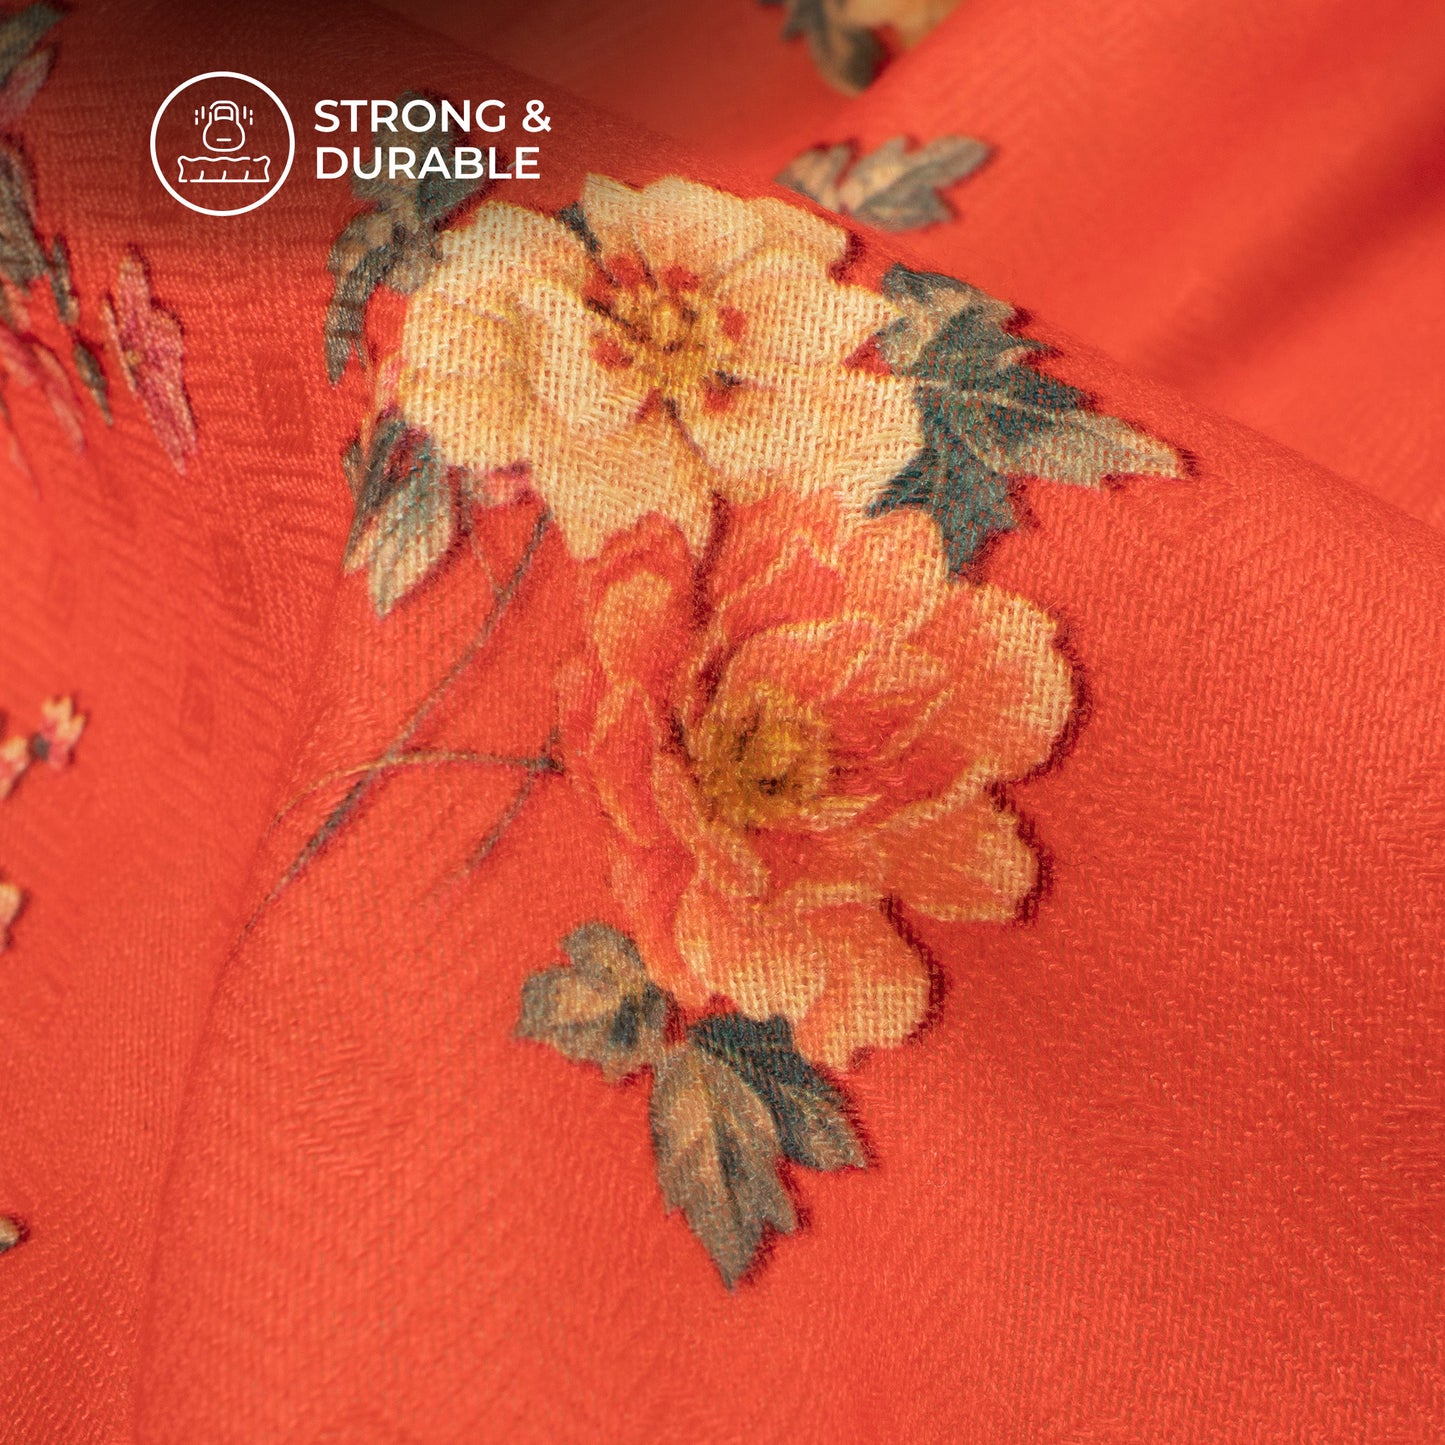 Classy Floral Digital Print Pashmina Fabric